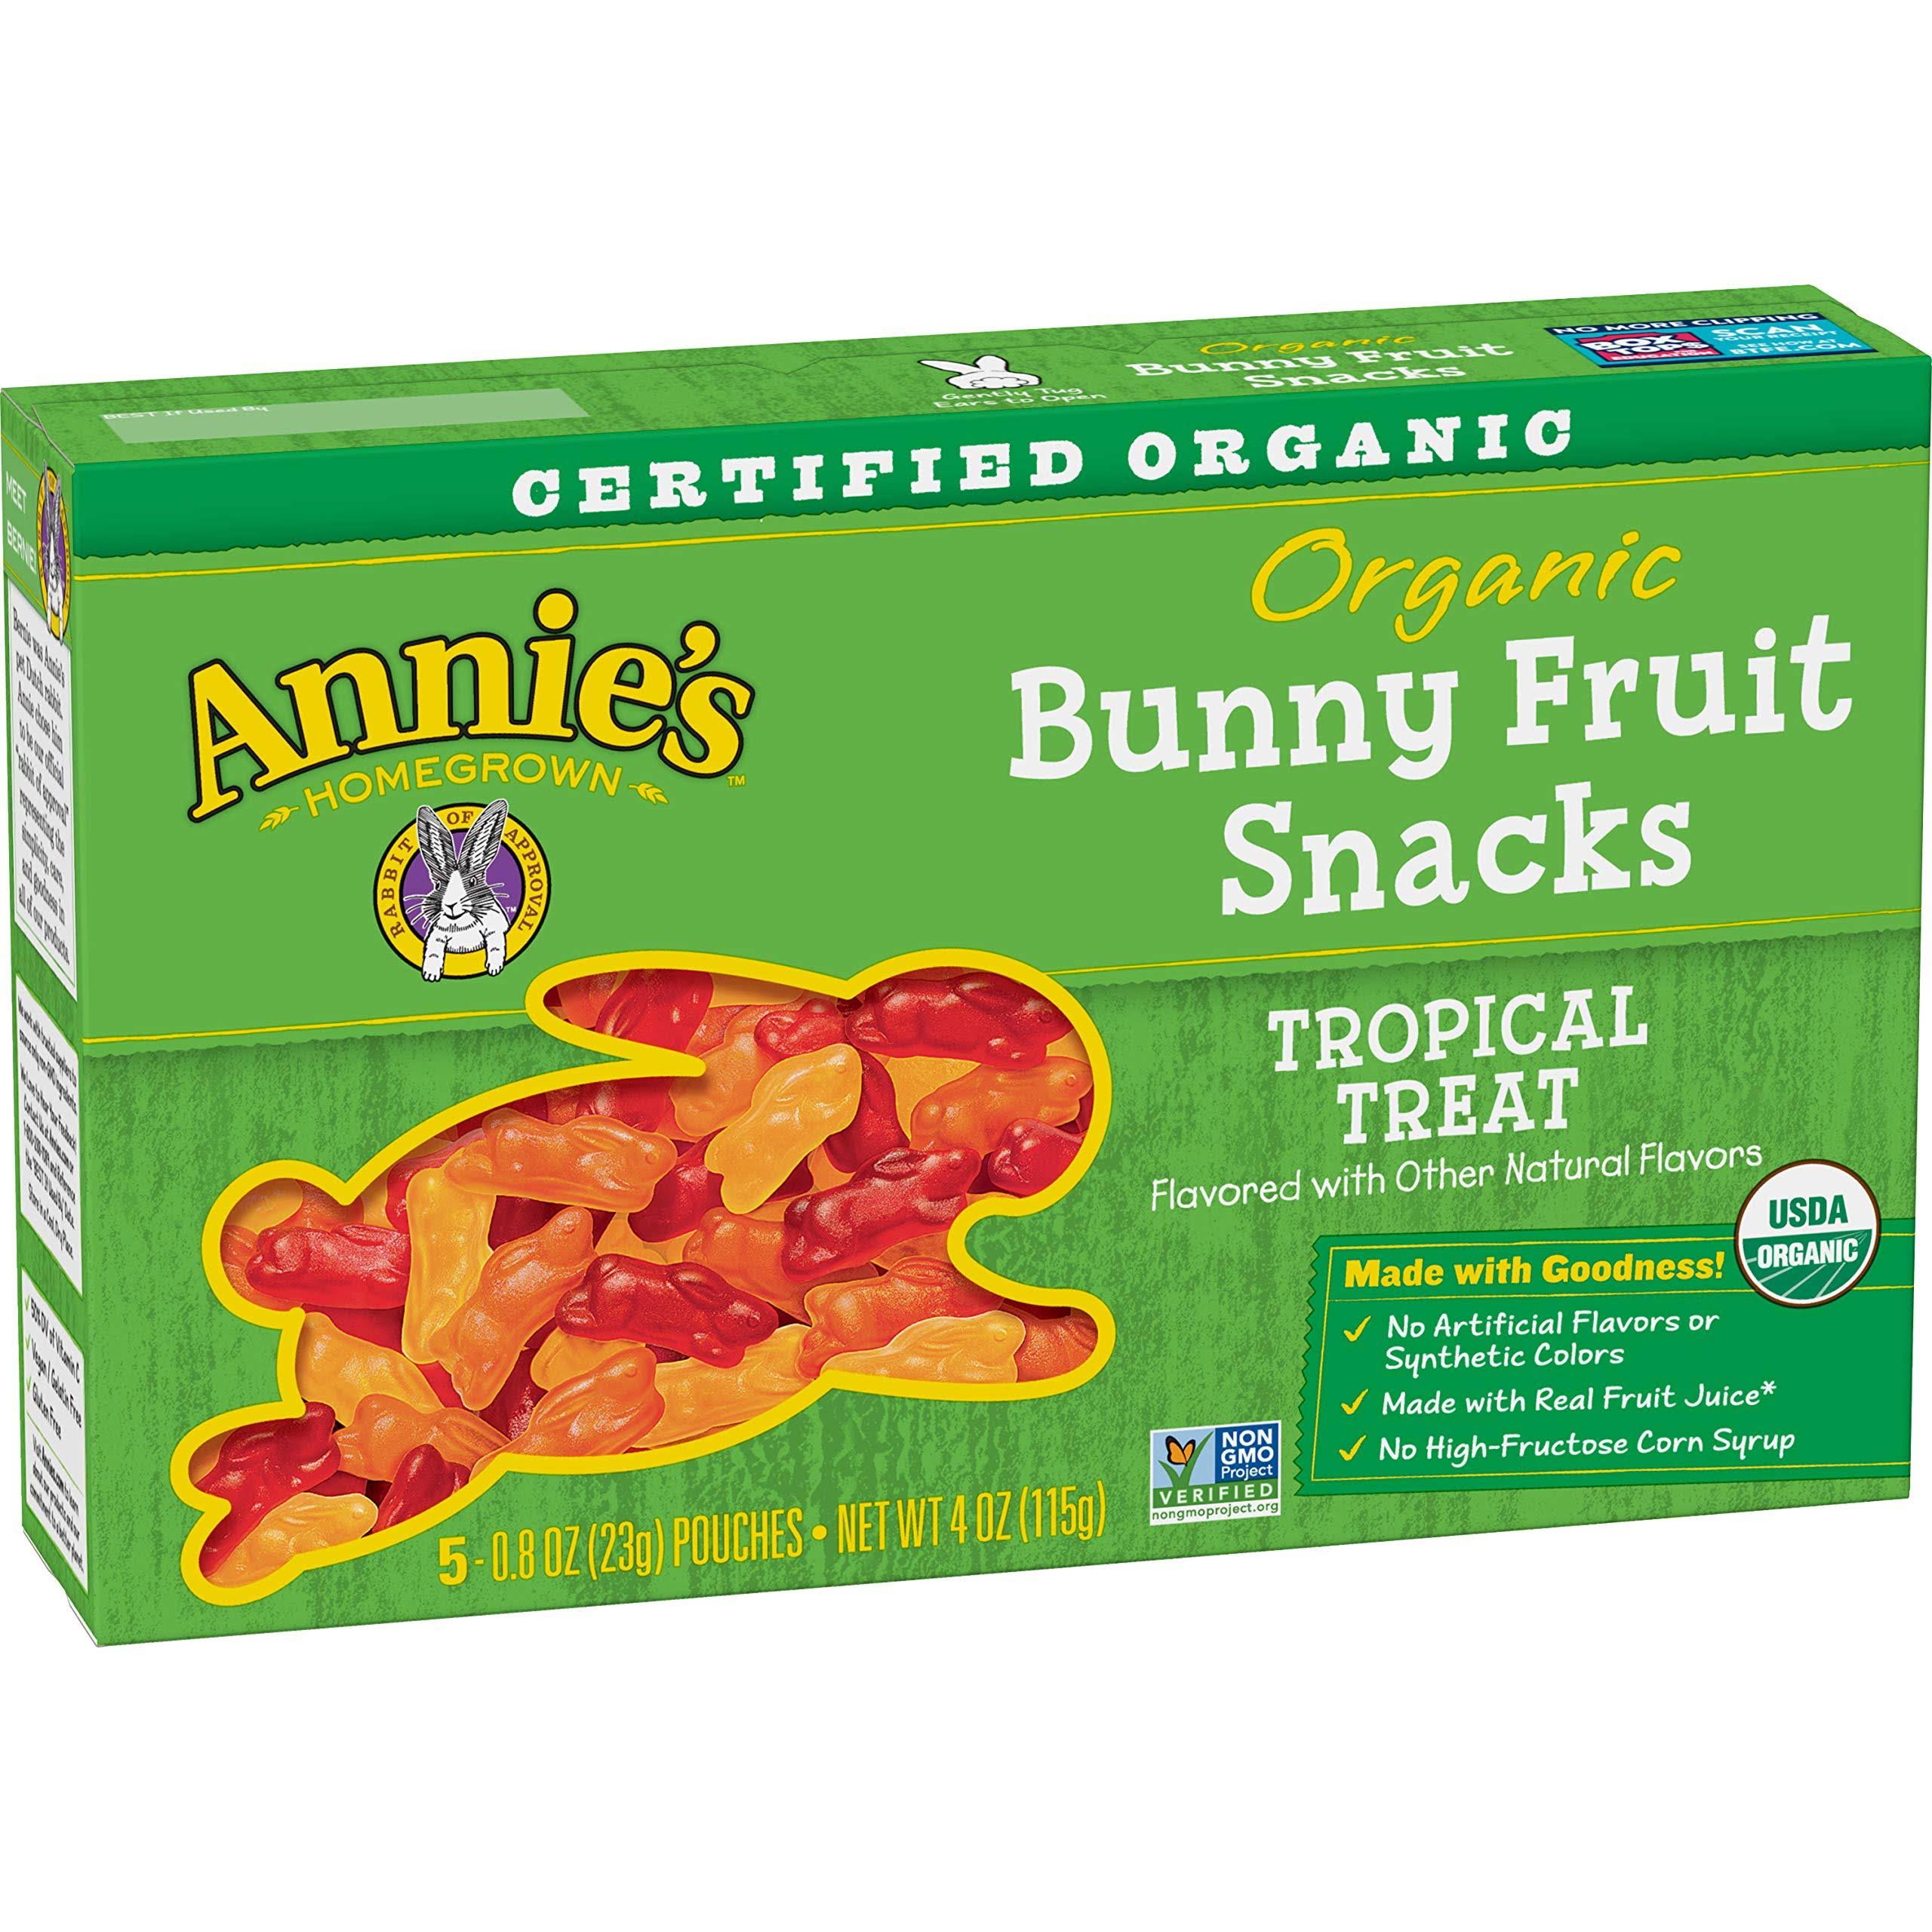 Annie's Homegrown Organic Bunny Fruit Snacks - Tropical Treat